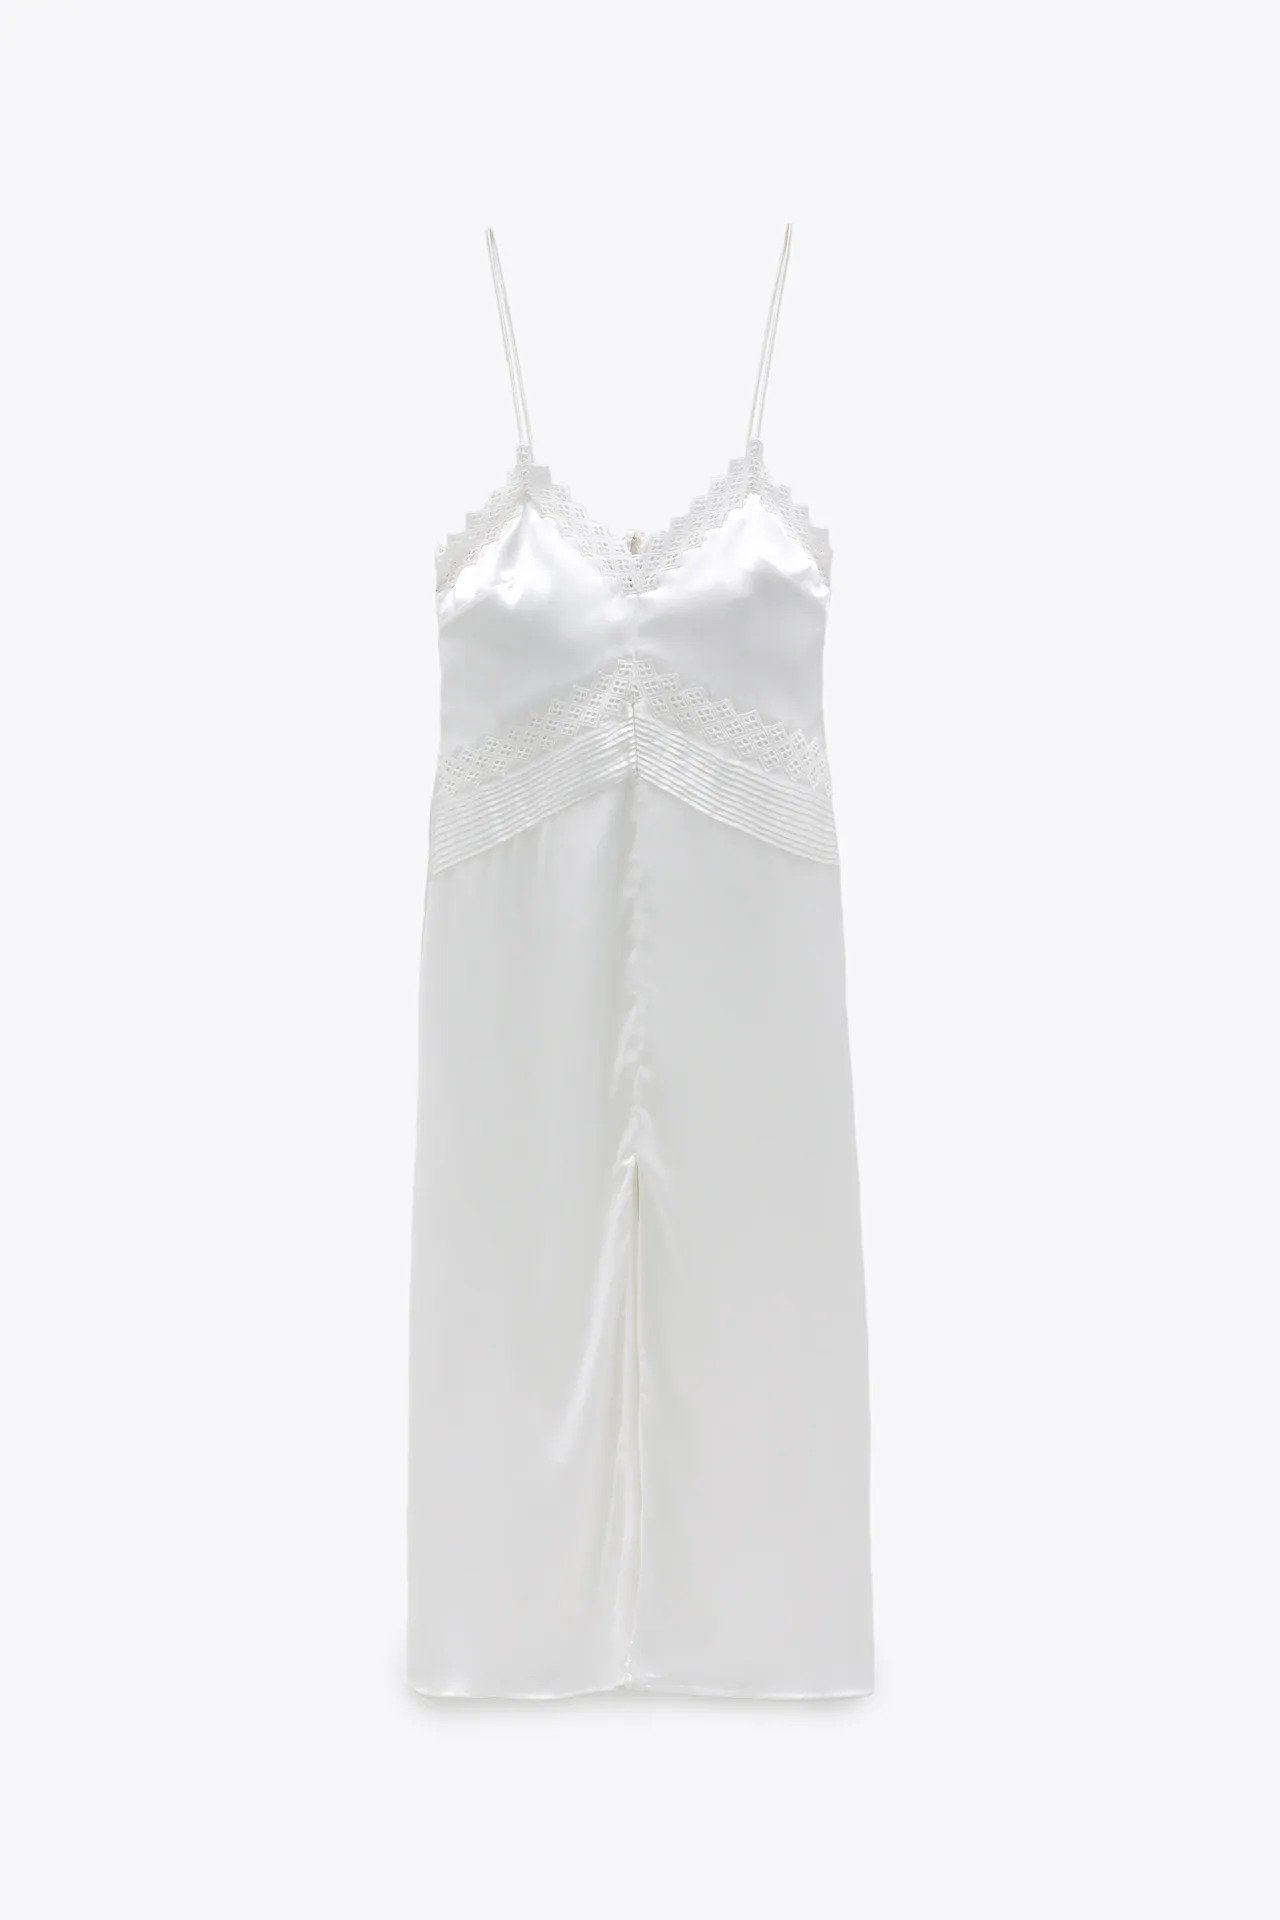 zara white summer dress